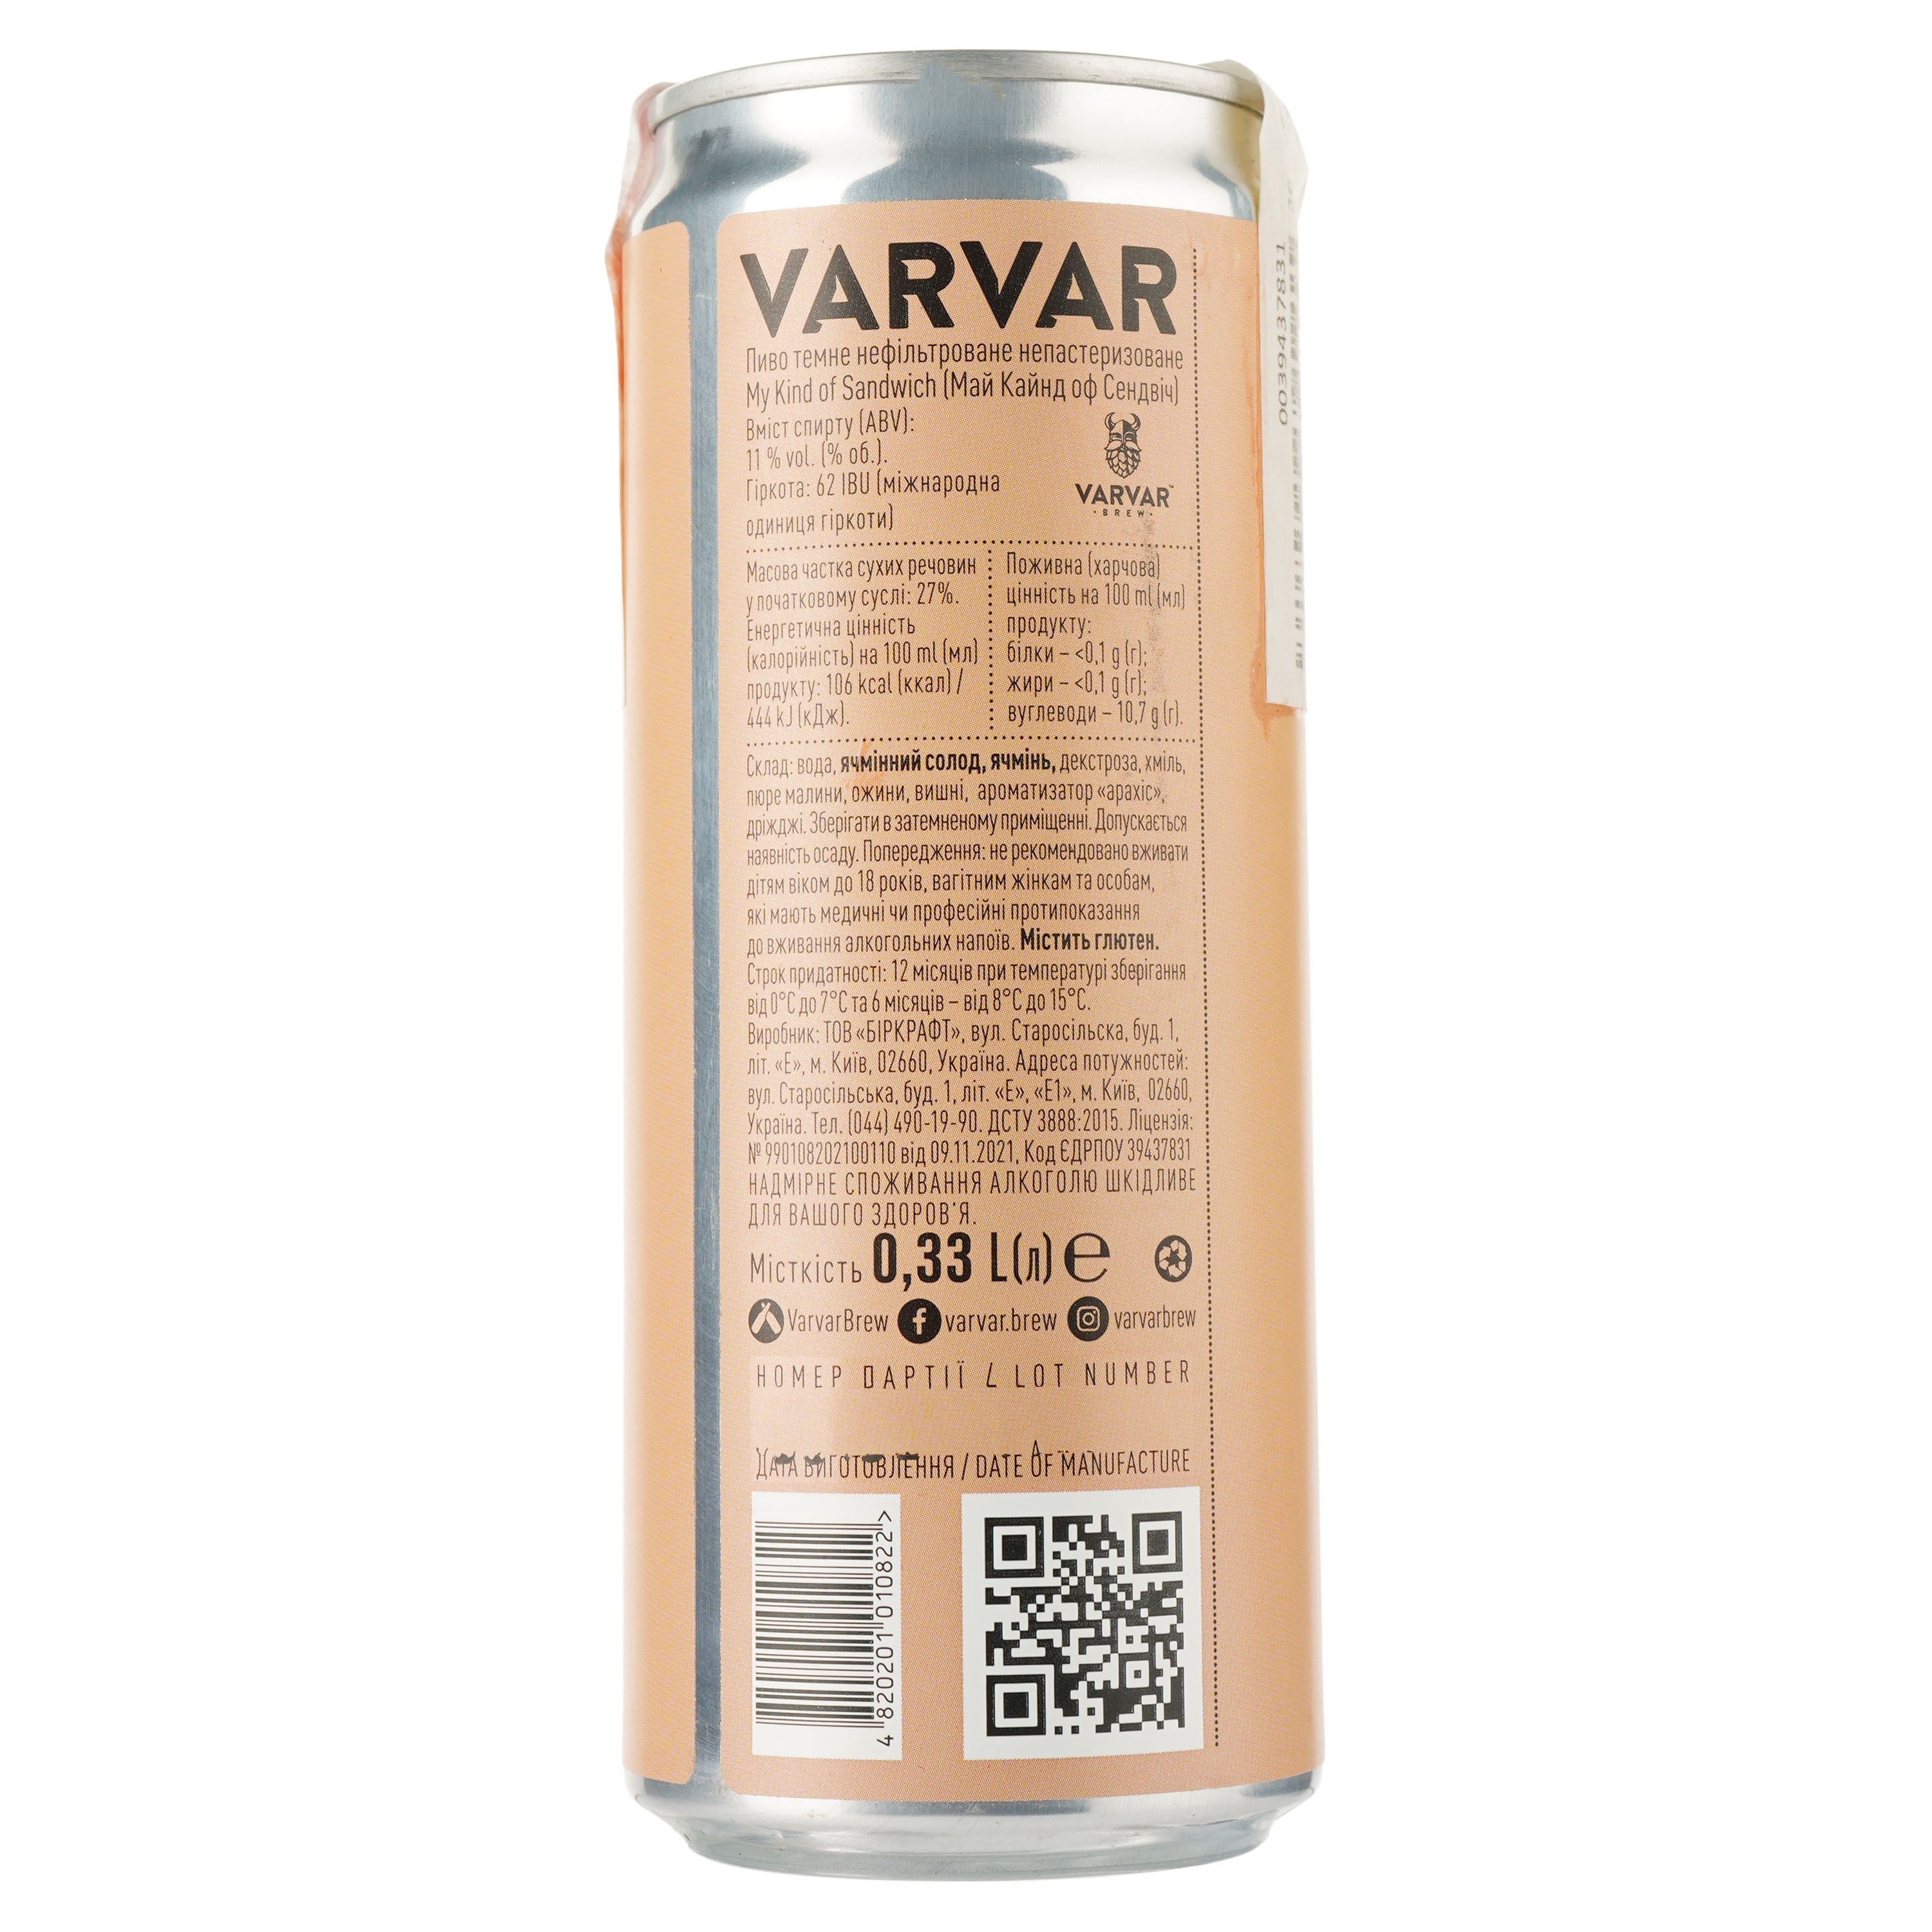 Пиво Varvar My Kind Of Sandwich, темное, 11%, ж/б, 0,33 л - фото 2